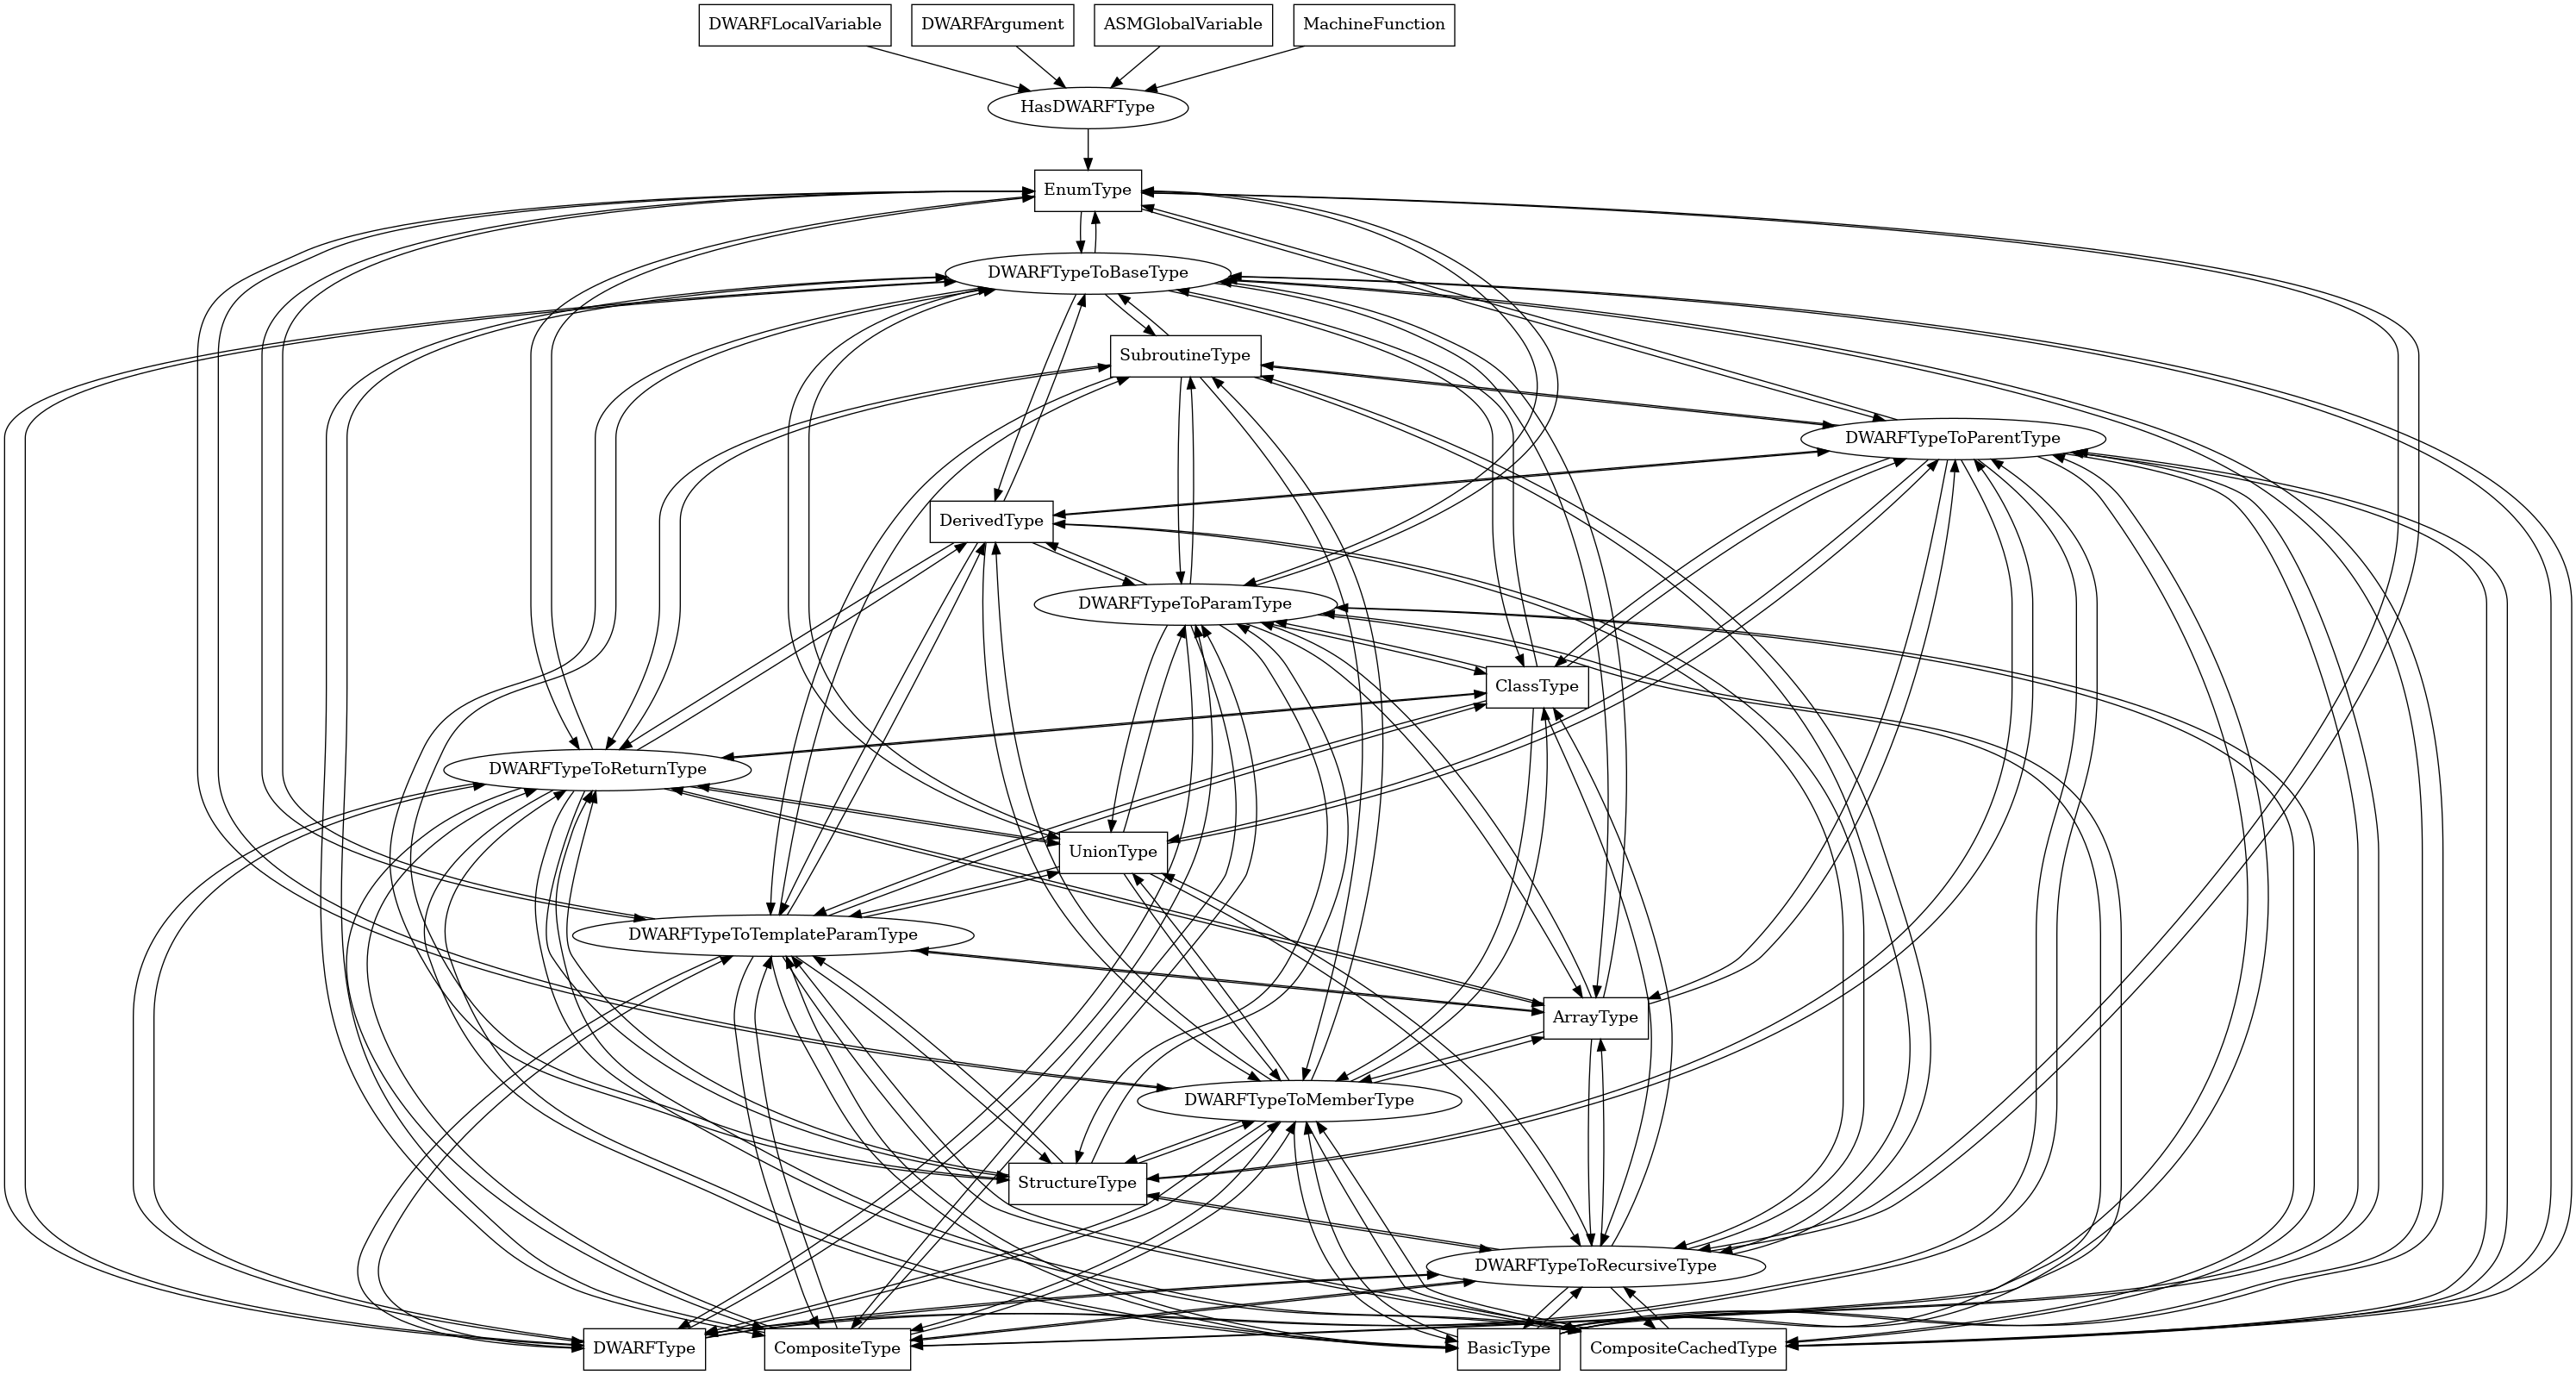 Entity-relationship diagram for EnumType nodes